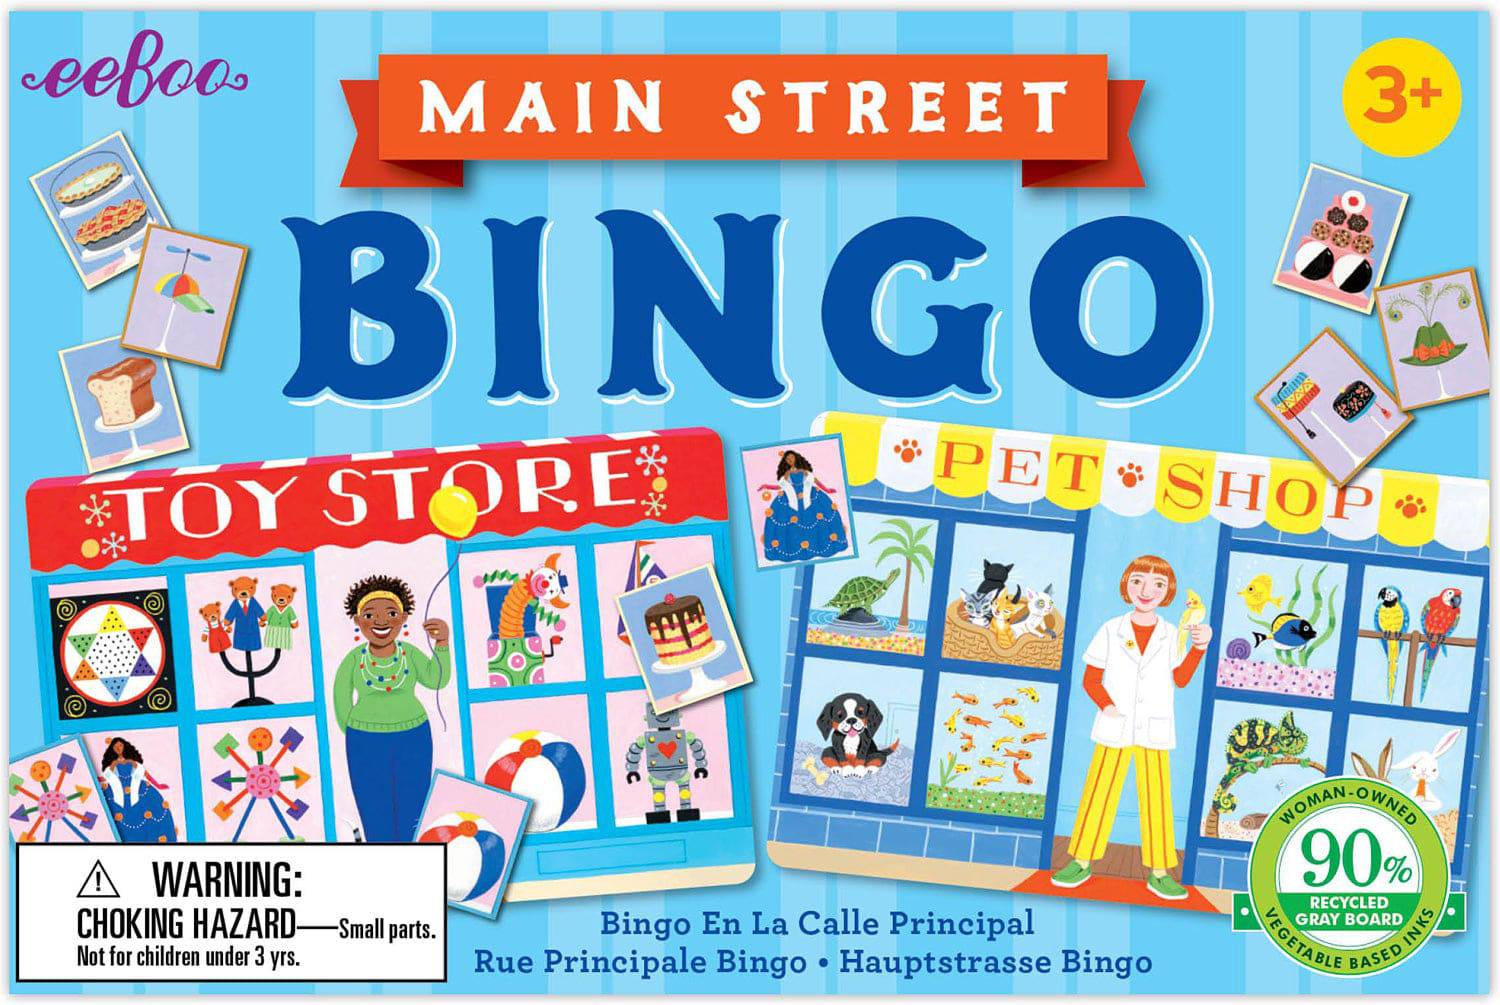 Main Street Bingo - A Child's Delight